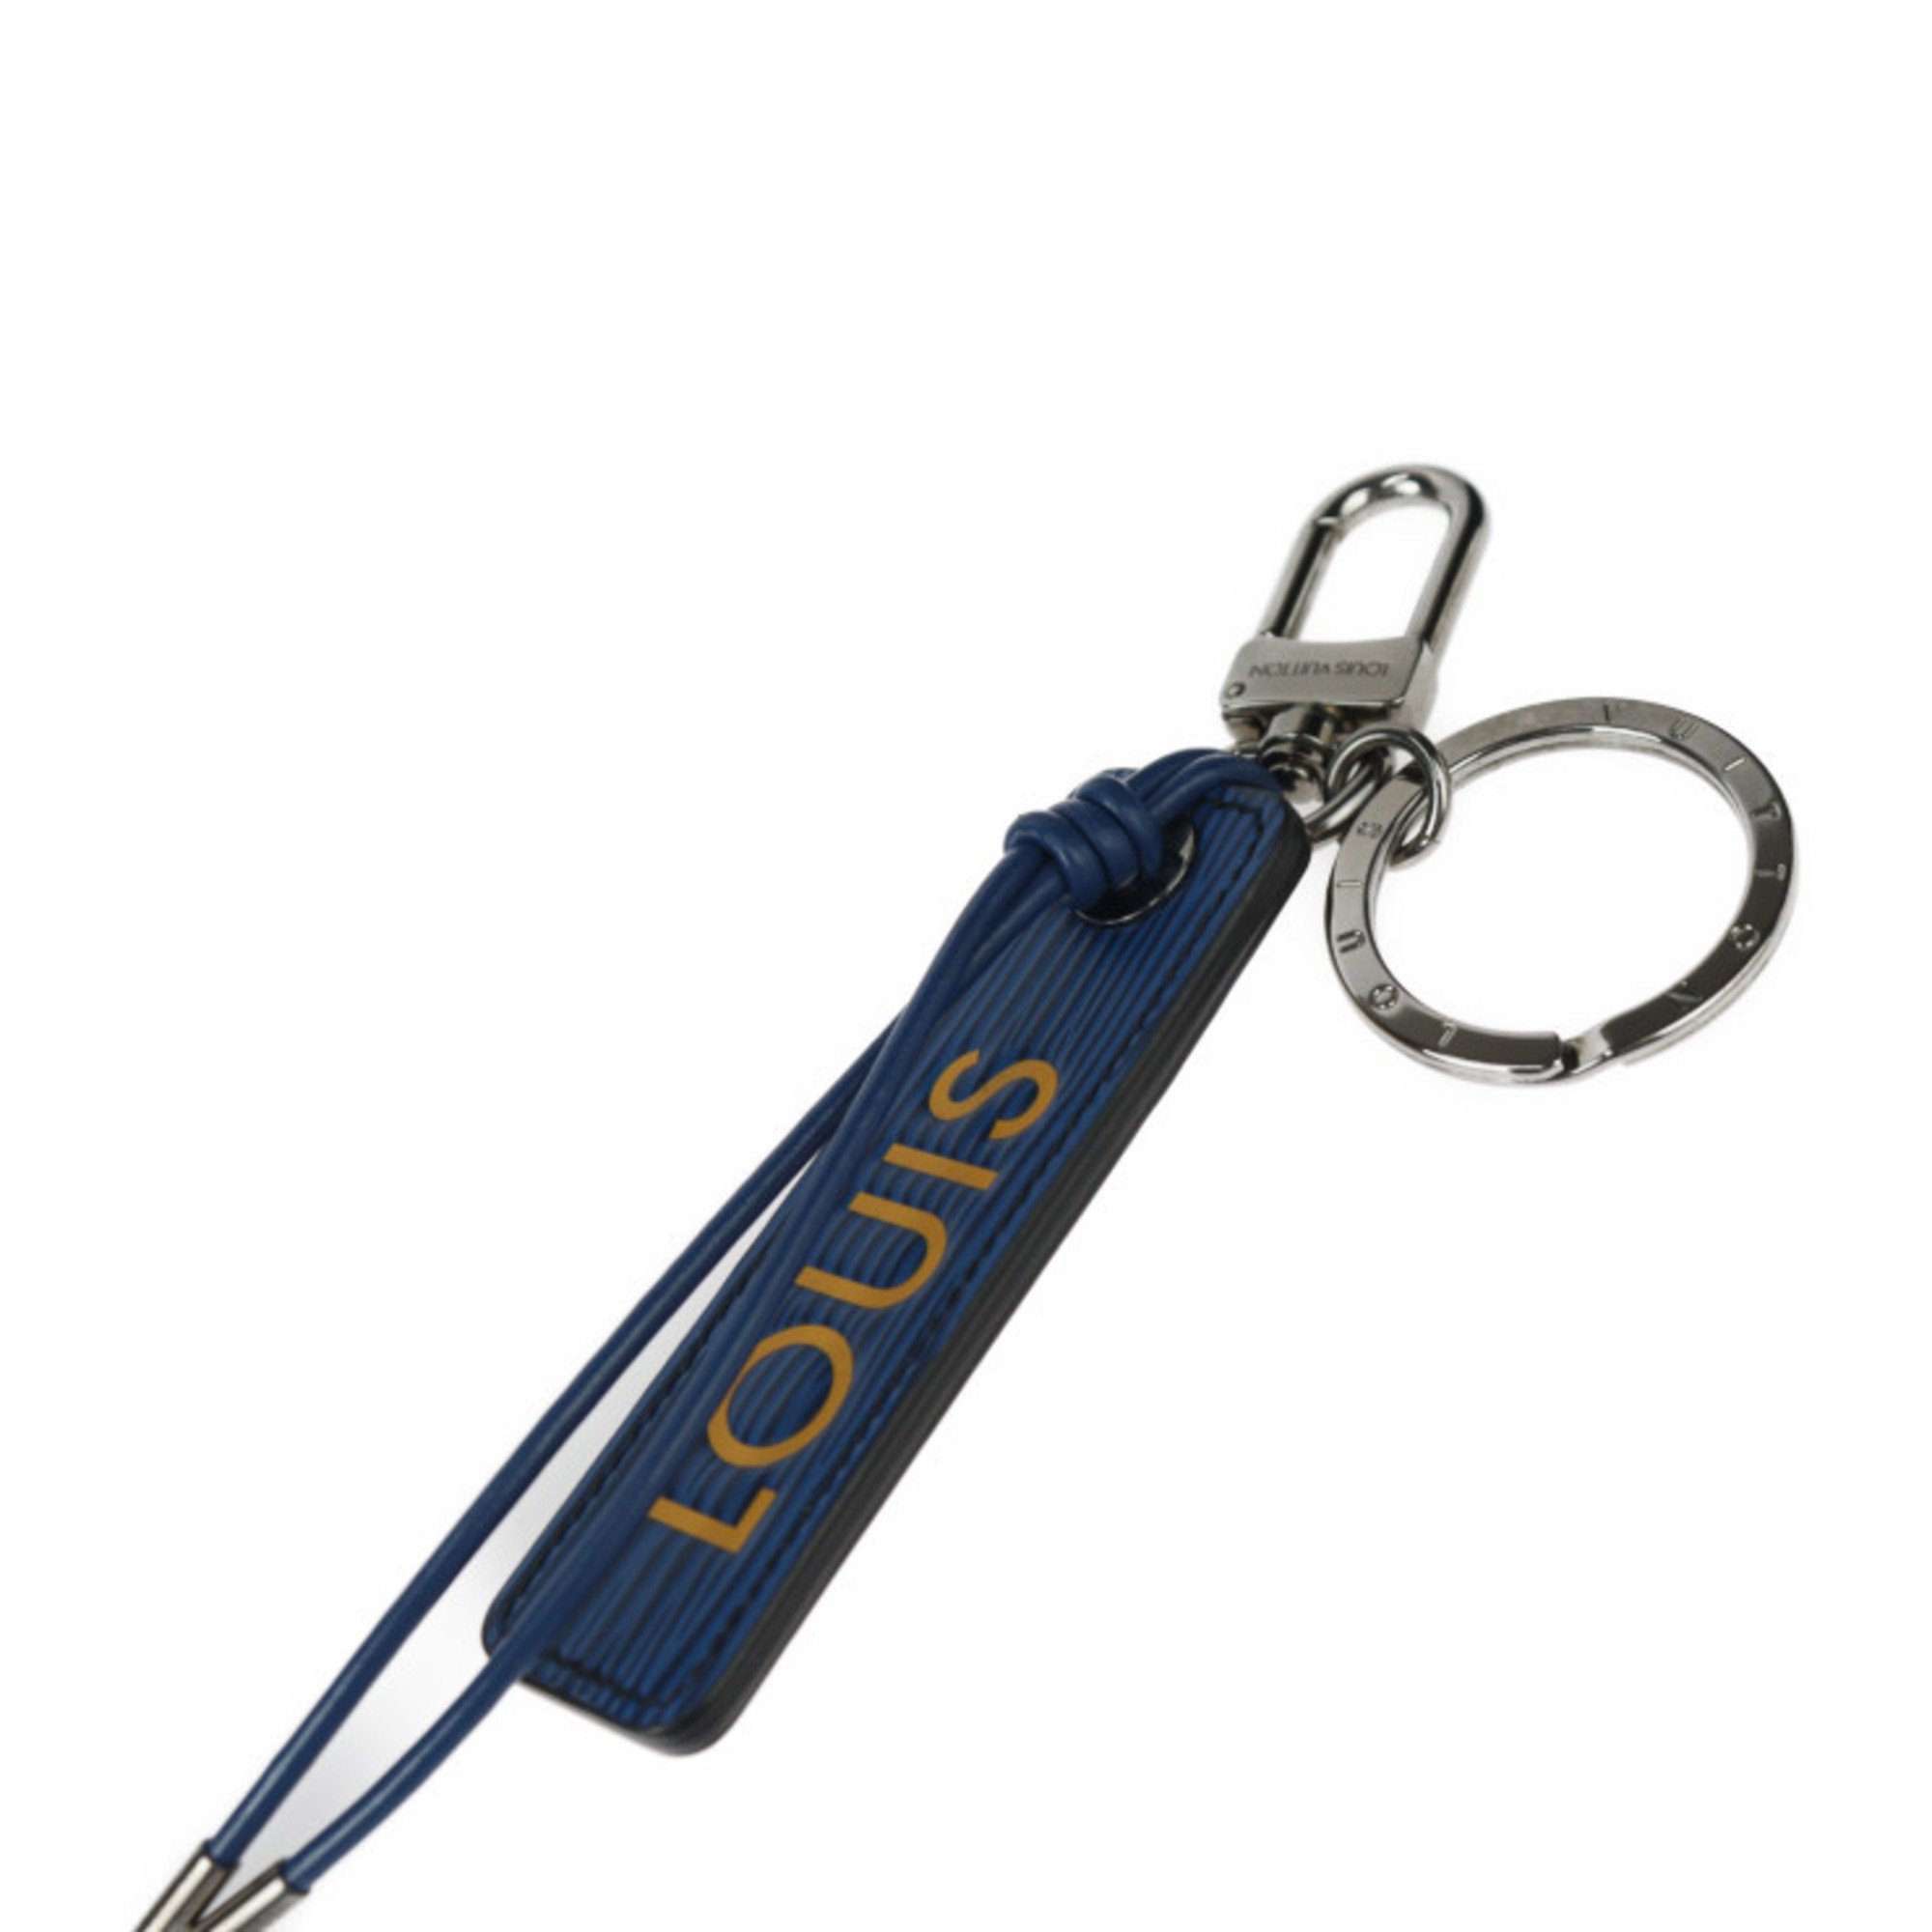 LOUIS VUITTON Louis Vuitton Porte-Clés LV Dual Keychain MP2553 Epi Leather Blue Yellow Key Ring Bag Charm